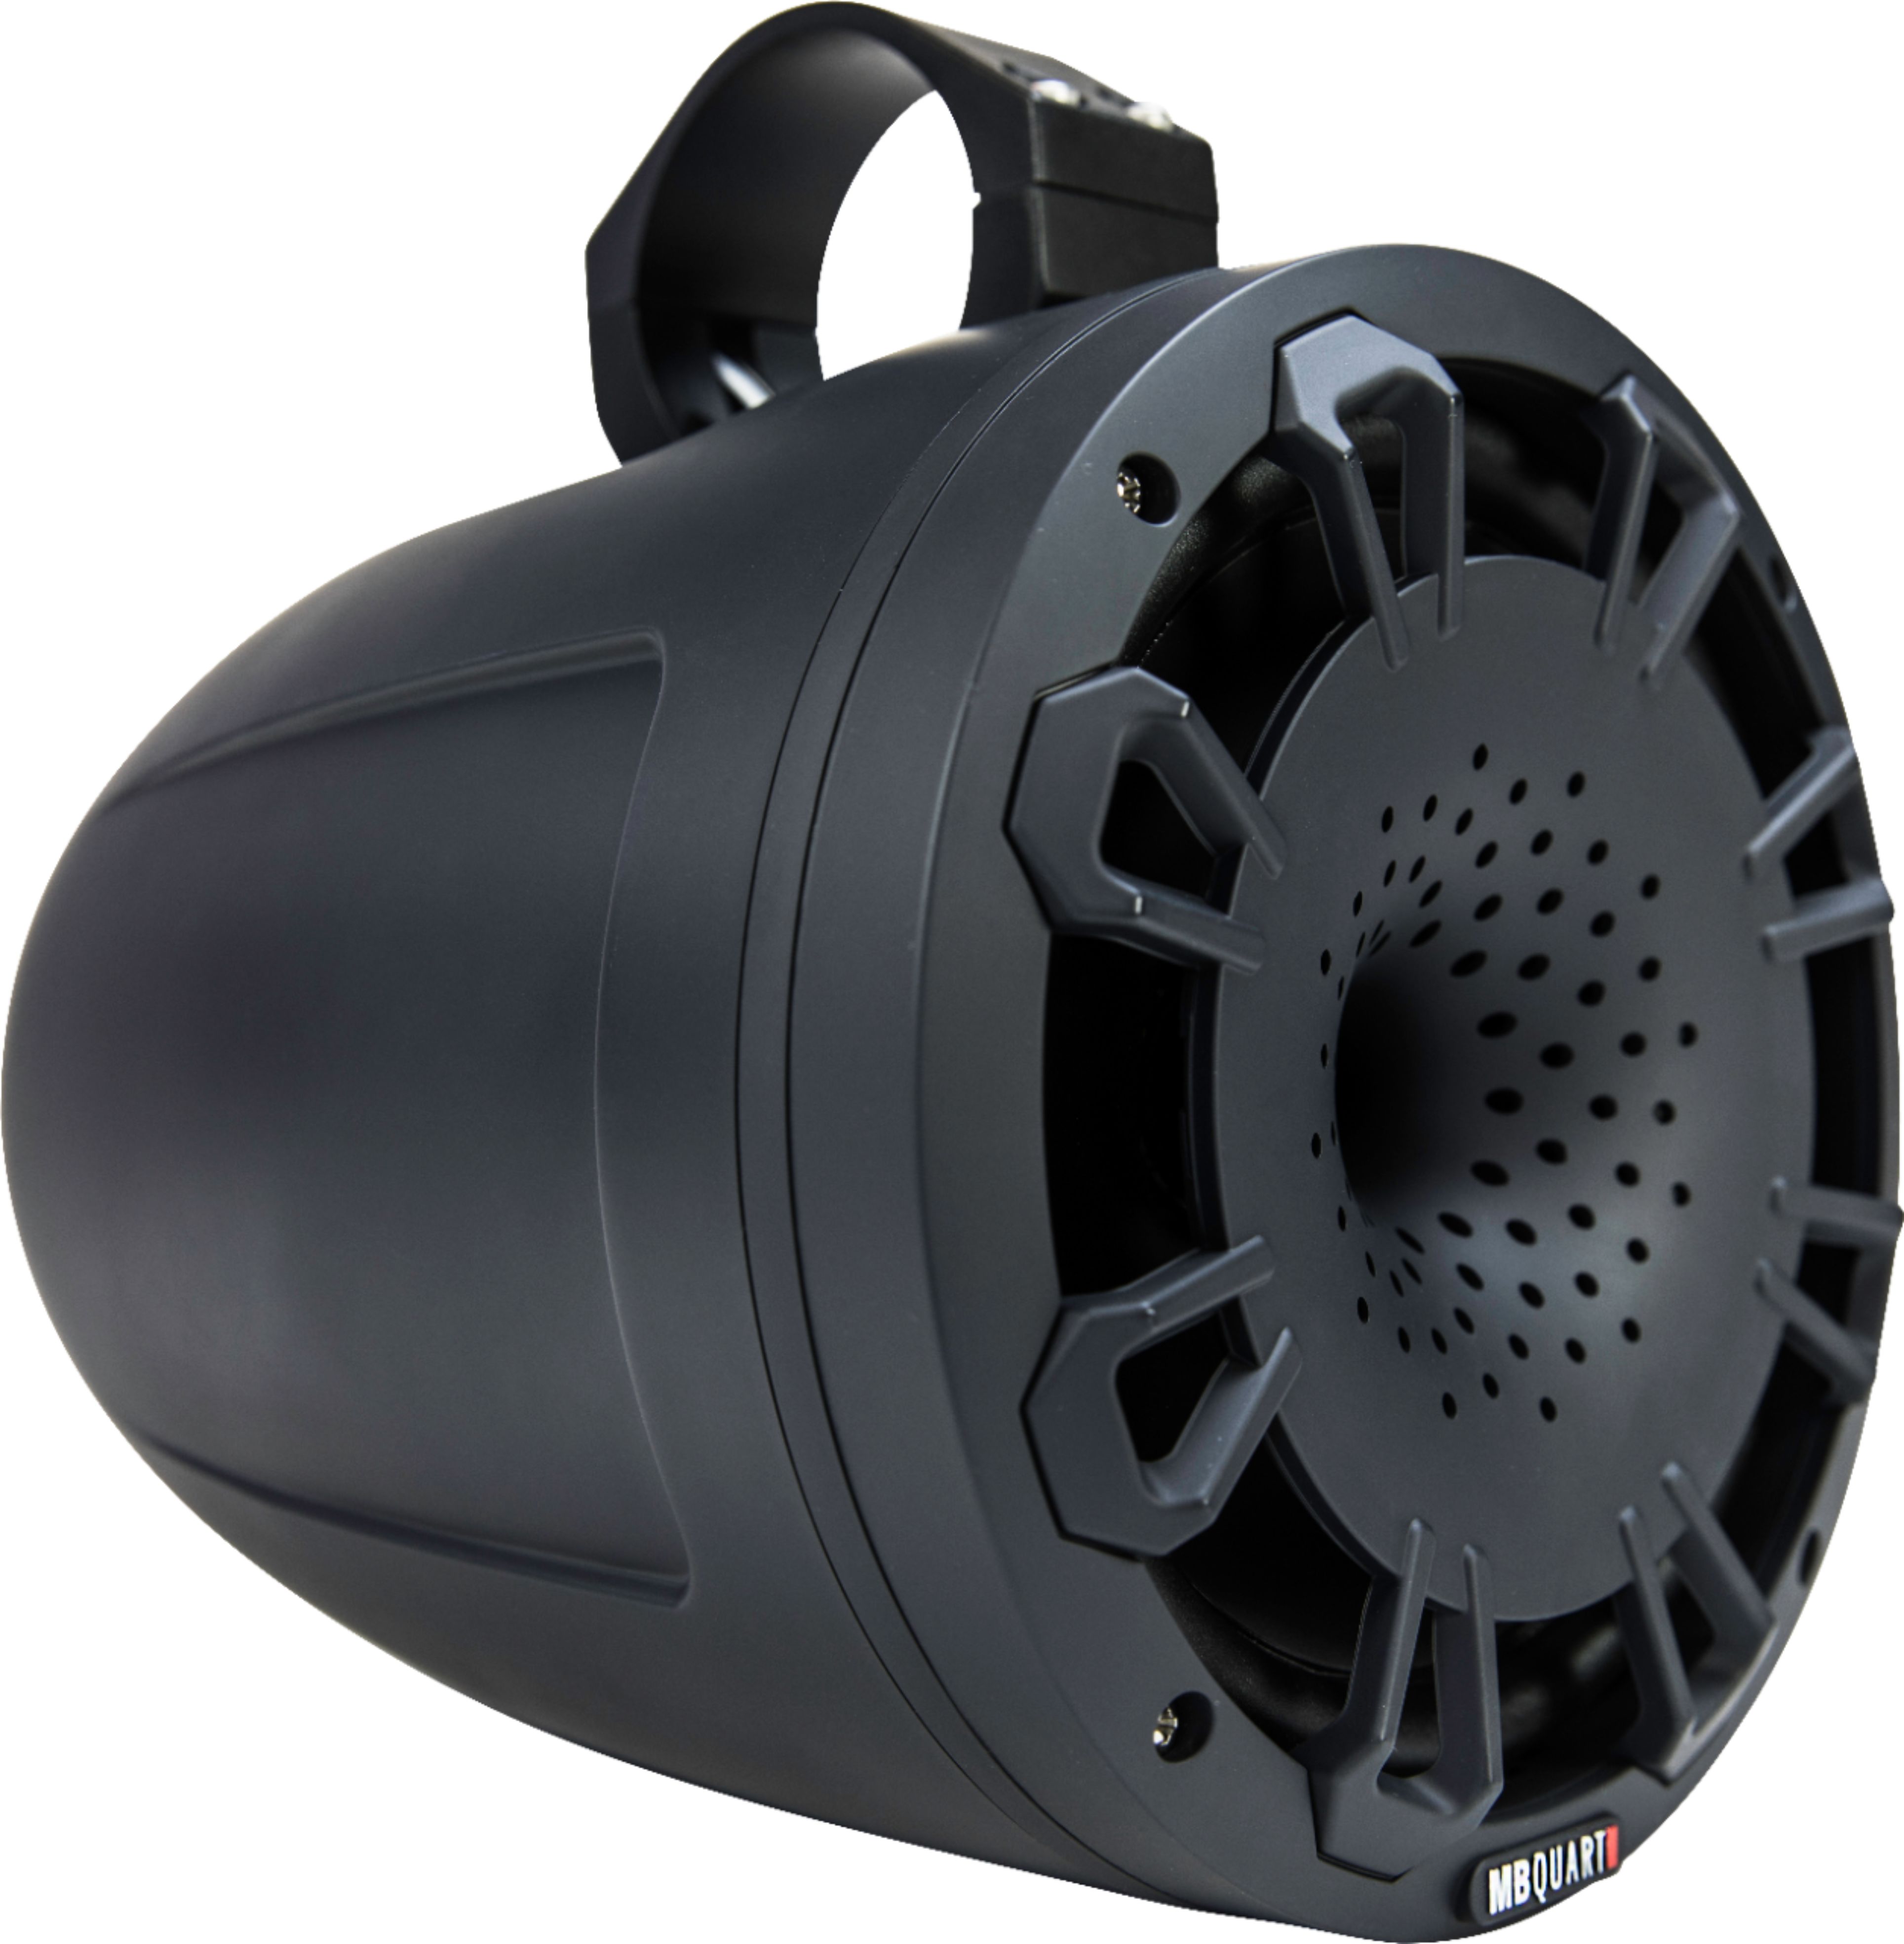 Angle View: KICKER - KMTC 11" 2-Way Marine Speakers with Polypropylene Cones (Pair) - Black